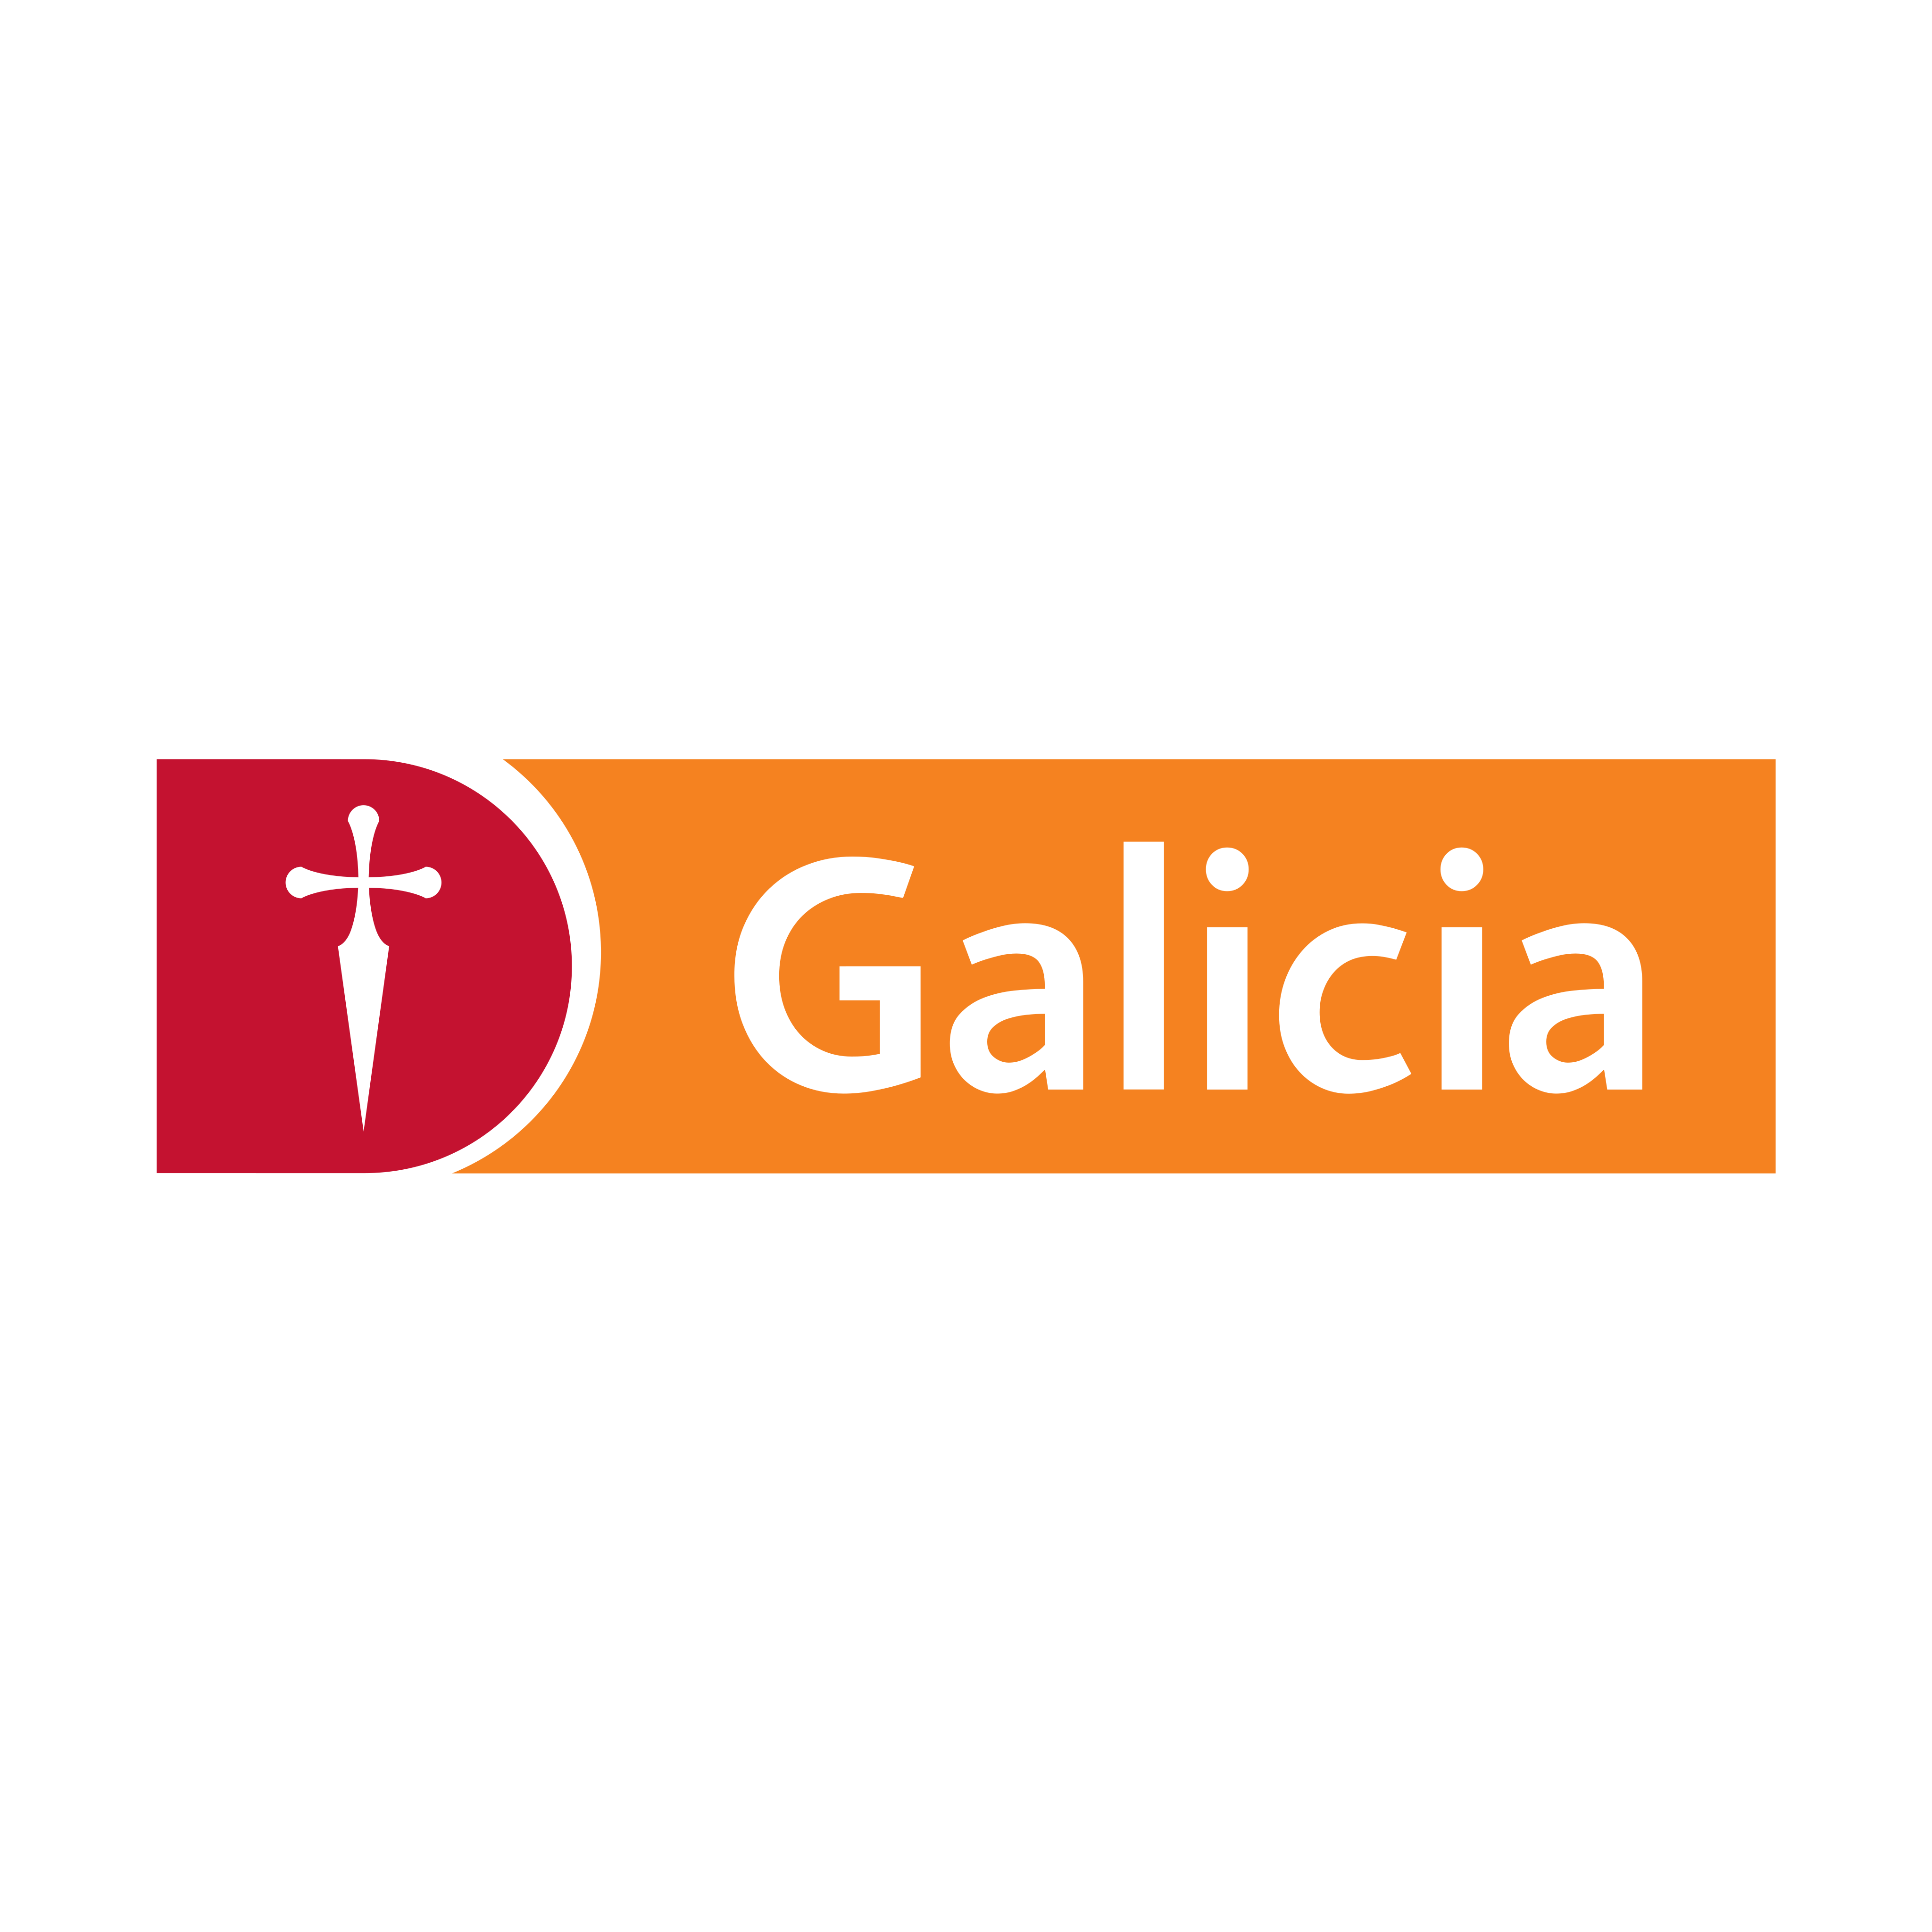 Banco Galicia Logo PNG.